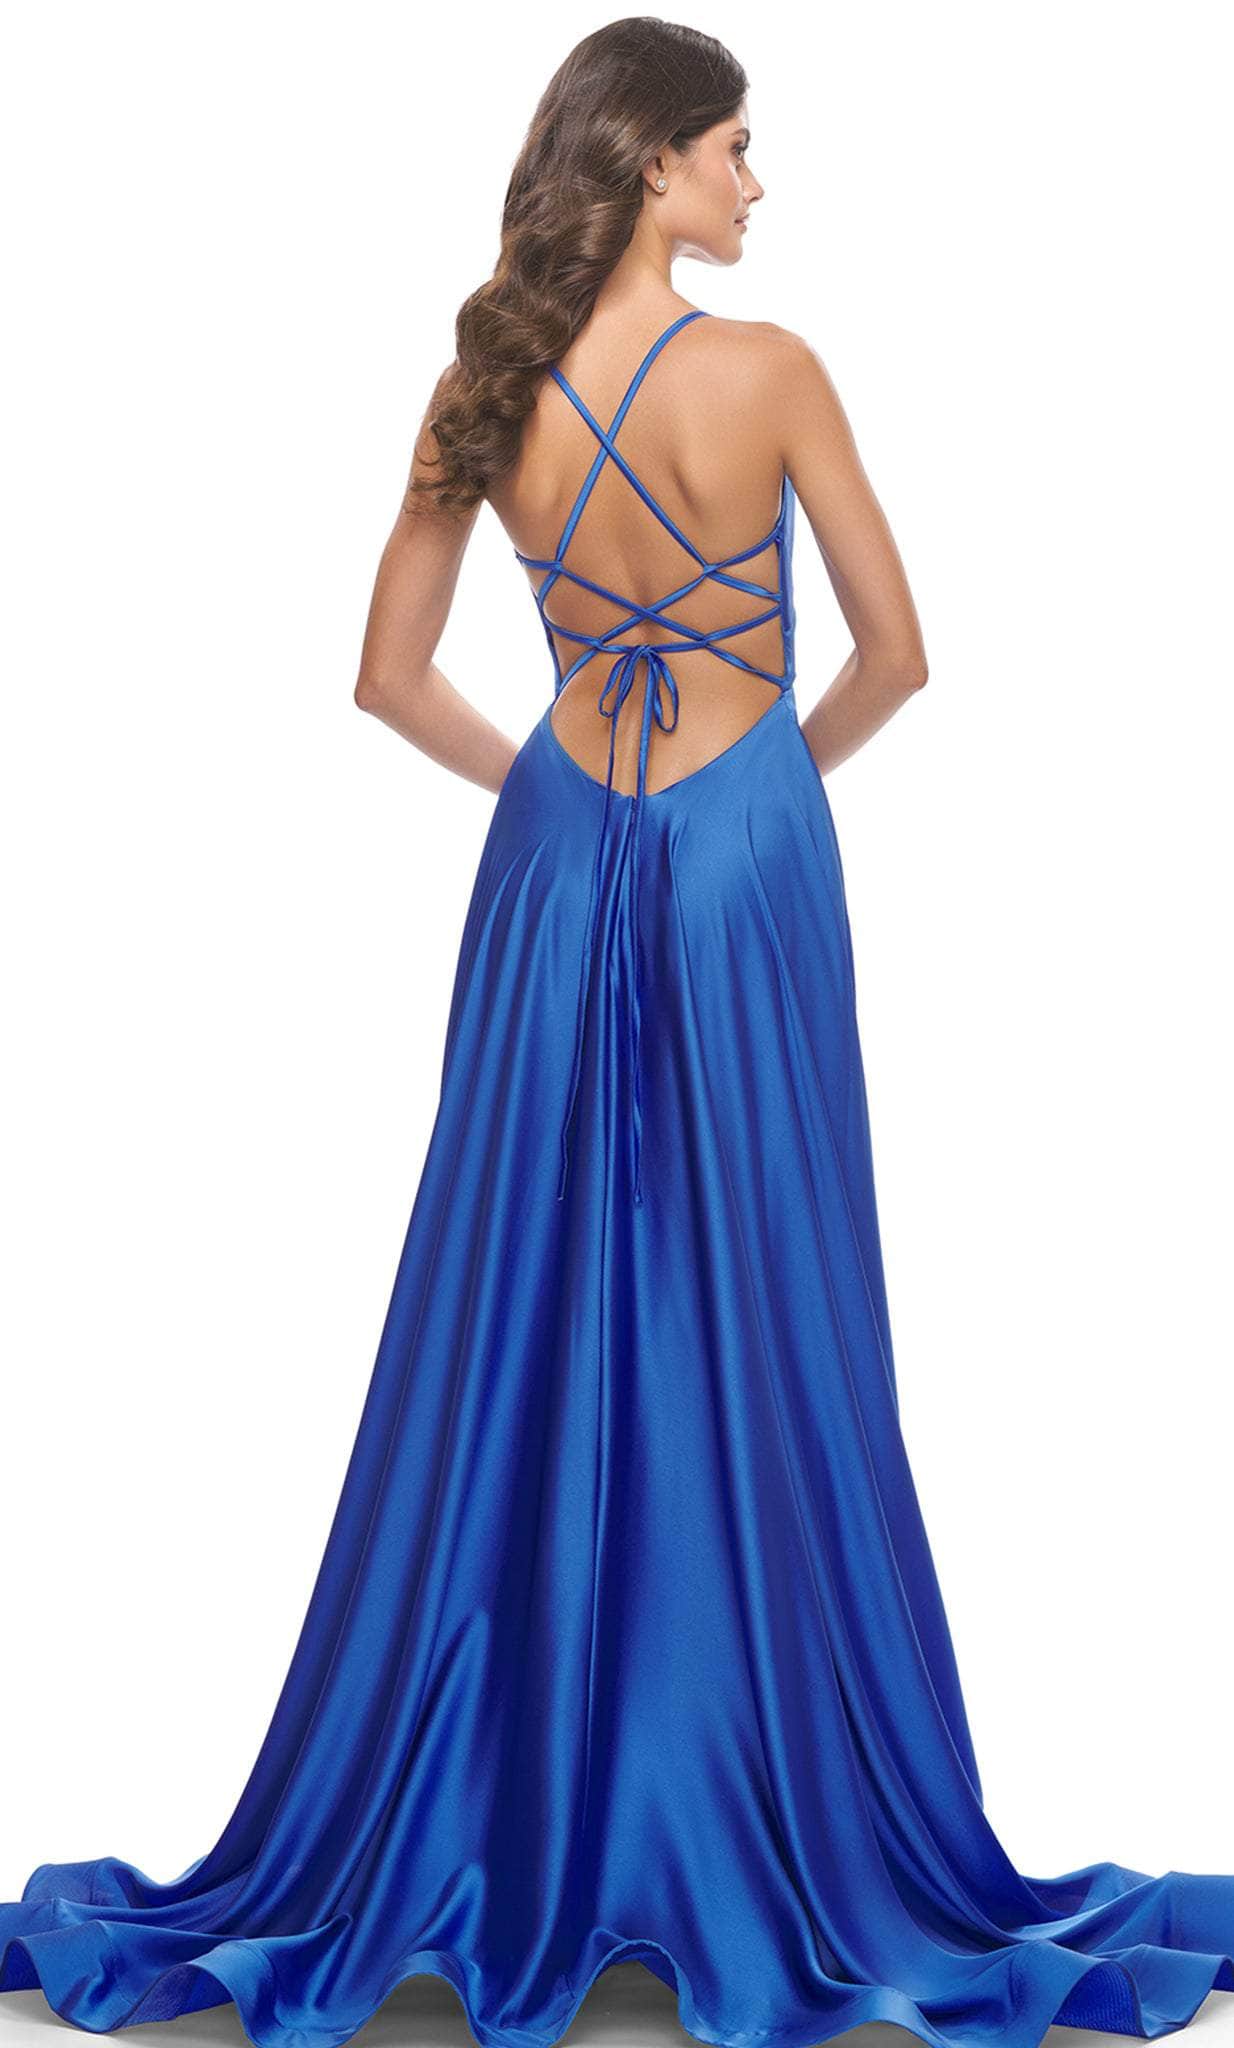 La Femme 31533 - V-Neck Dress